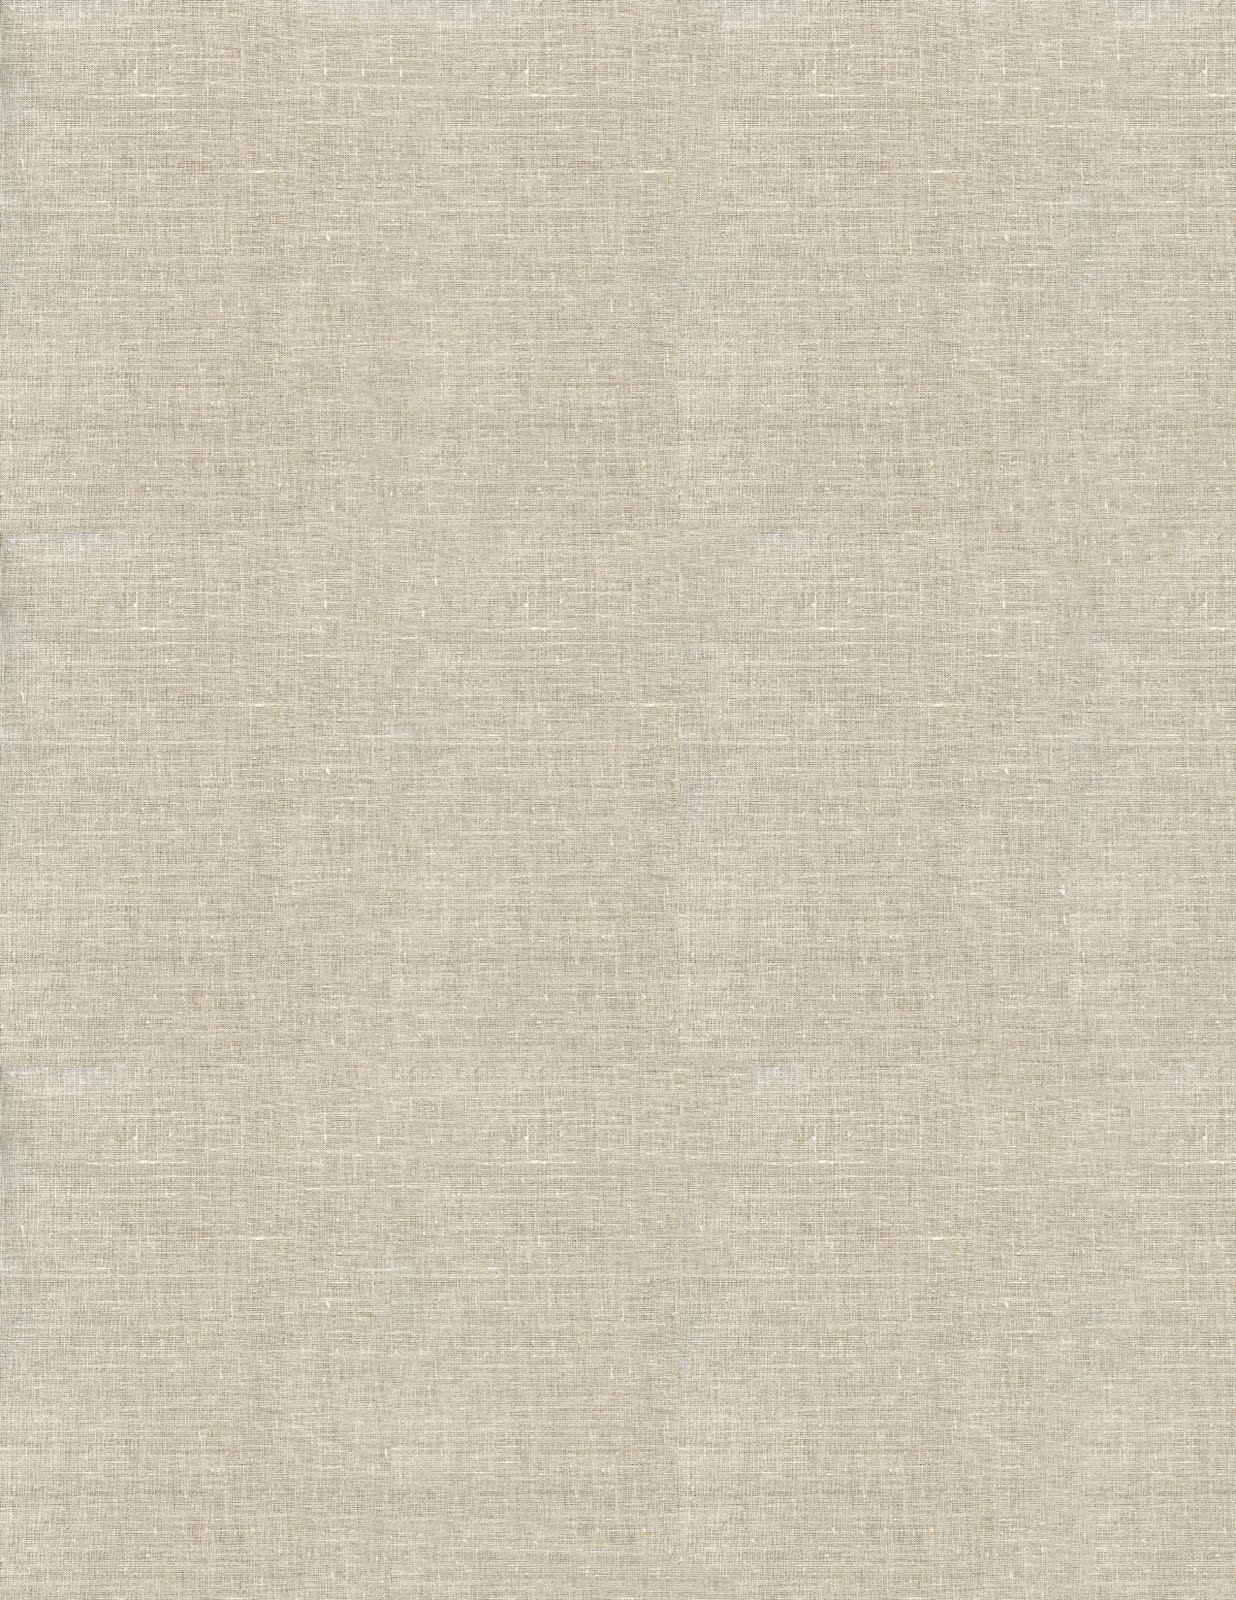 Linen Paper Texture Picture, Free Photograph